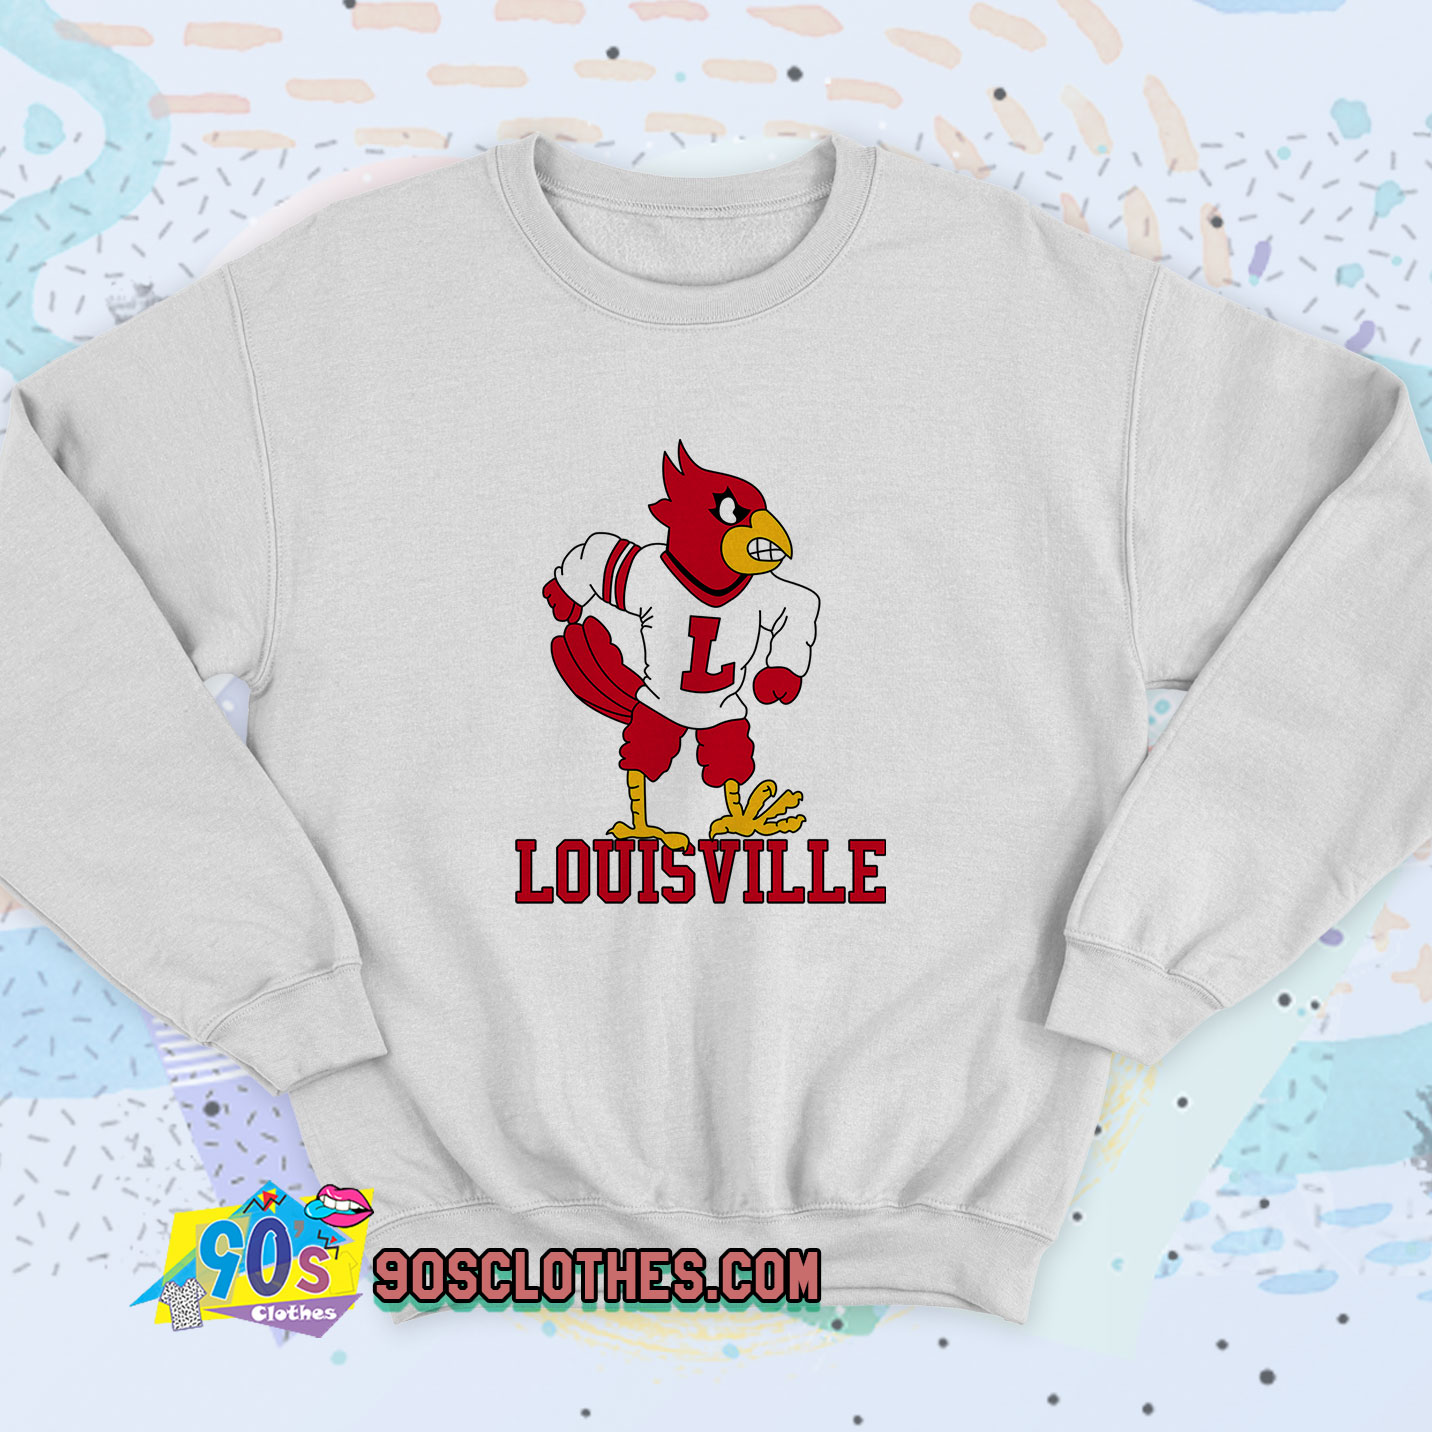 Vintage Louisville Cardinals Sweatshirt University Football Fan Shirt Gifts  Louisville Fans - Bluefink